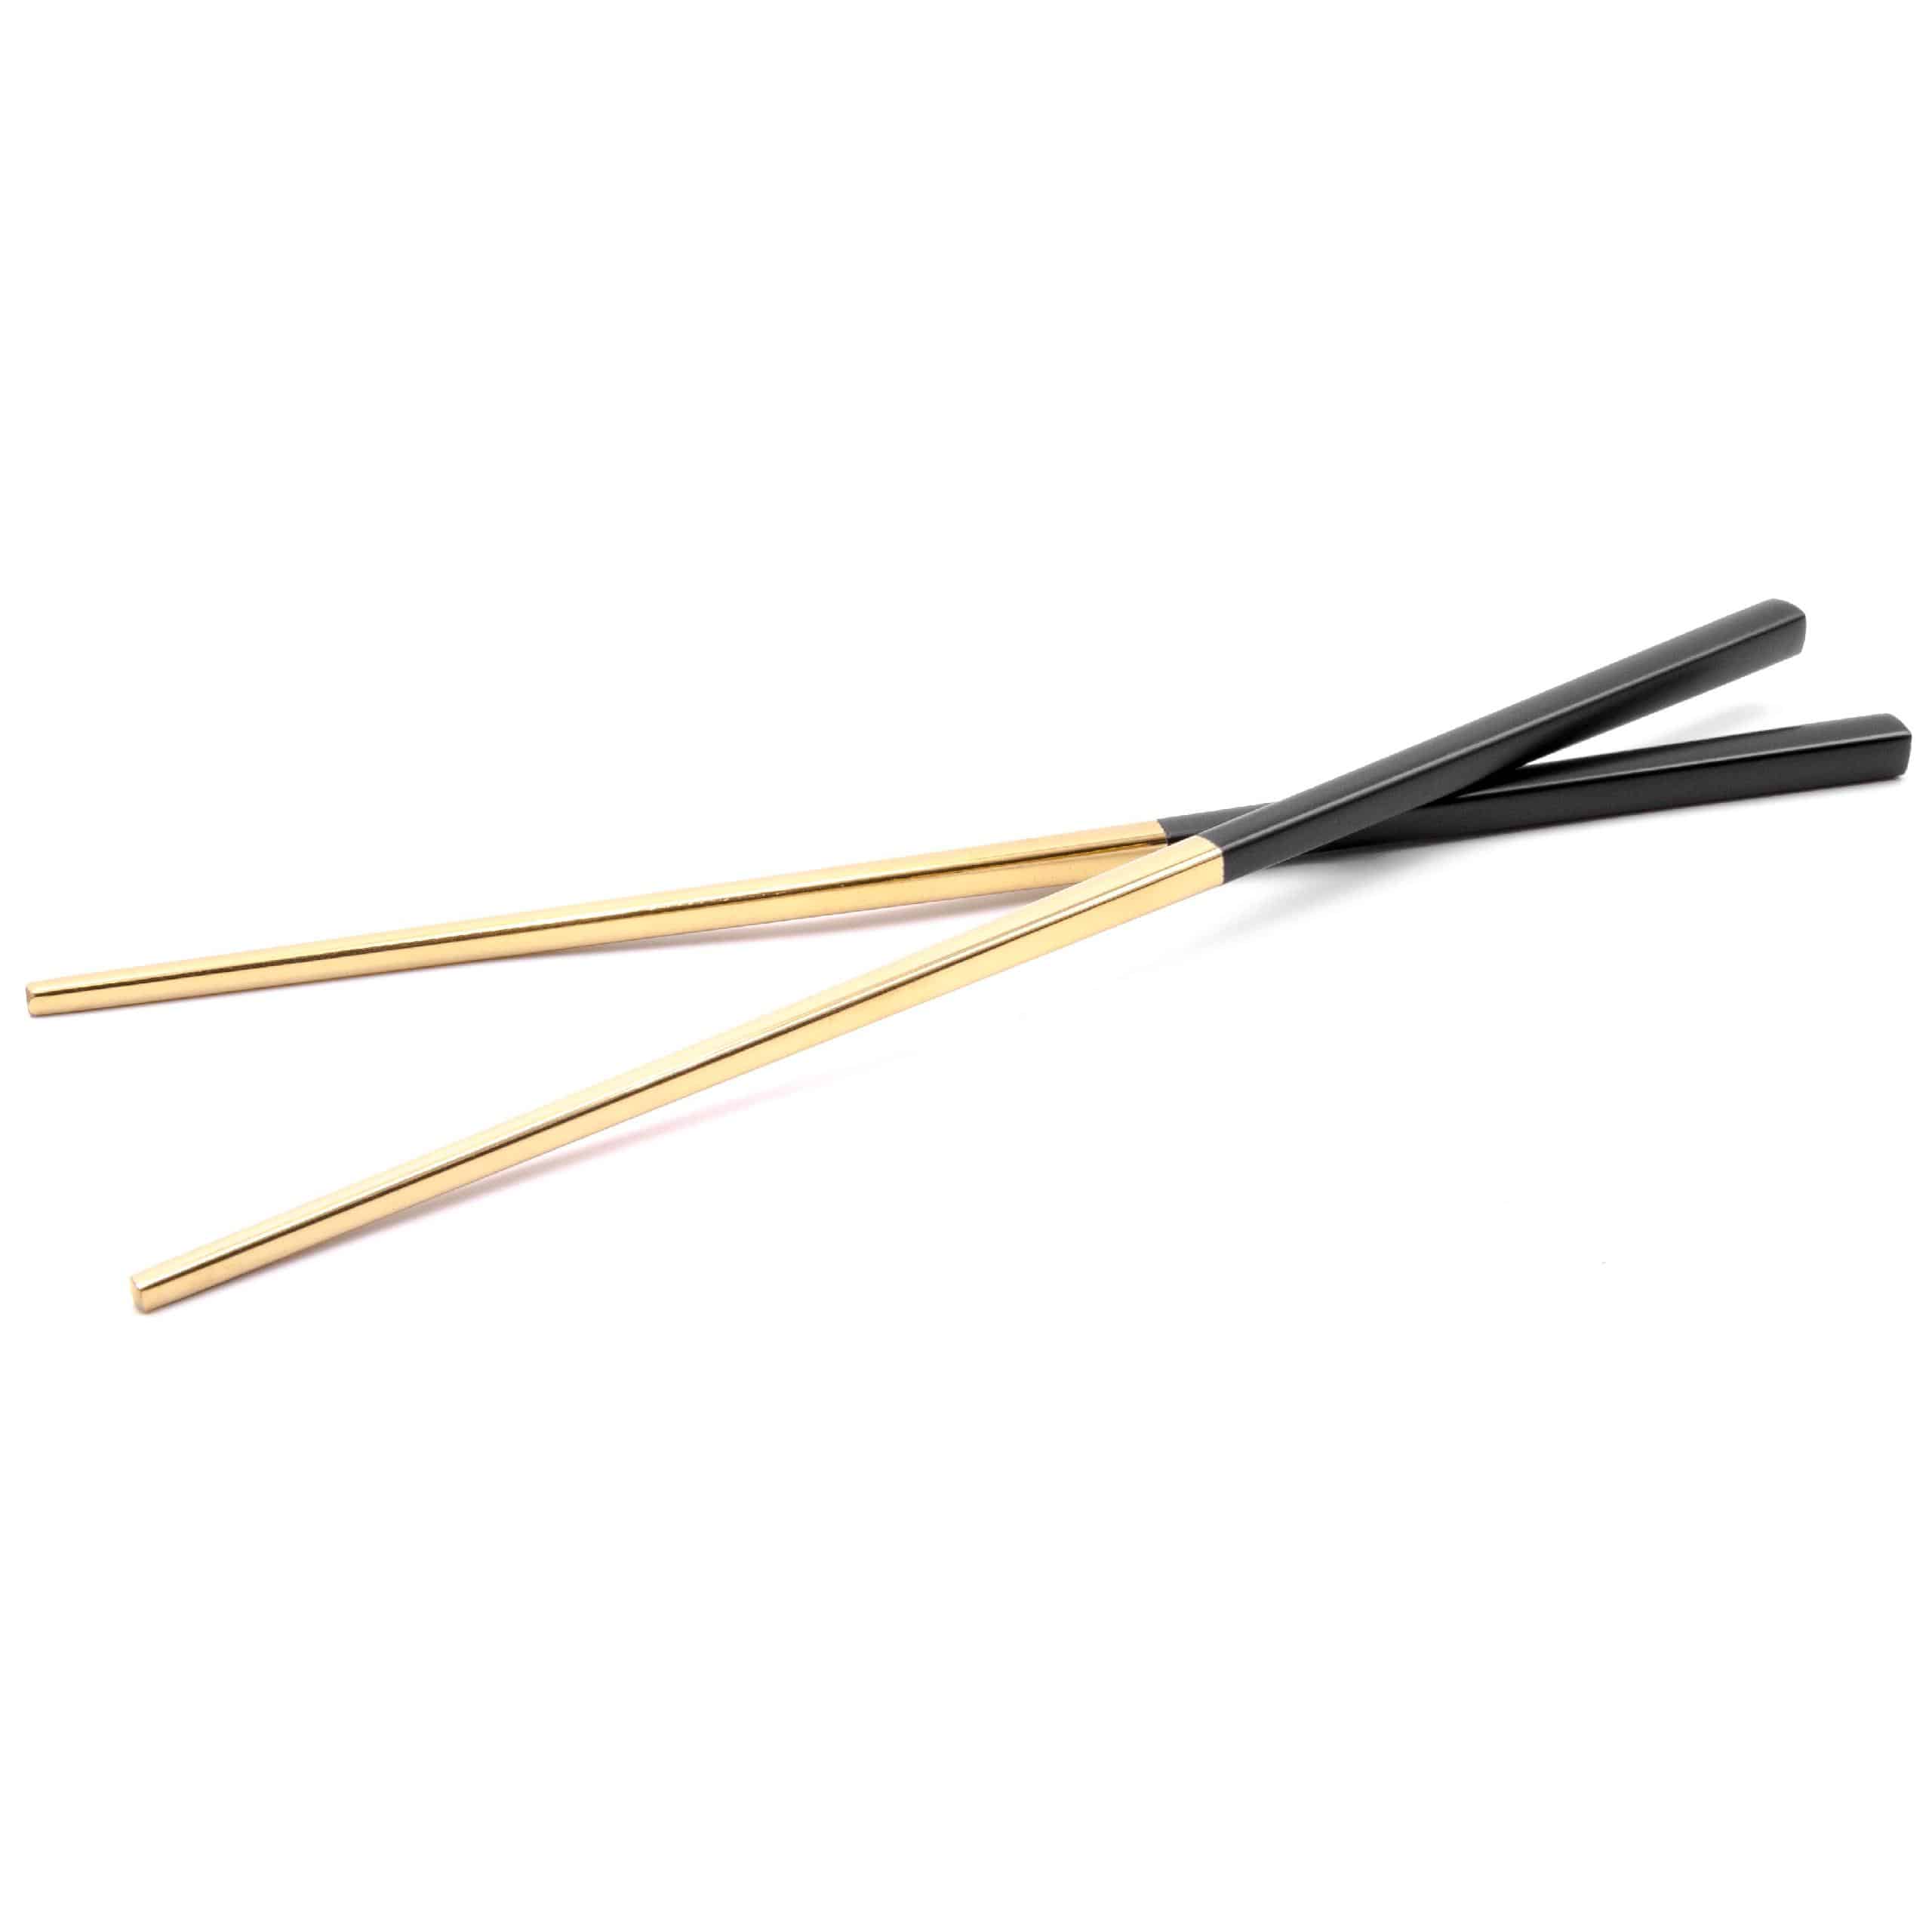 Chopstick Set (1 Pair) - Stainless Steel, gold, black, 23 cm long, Reusable